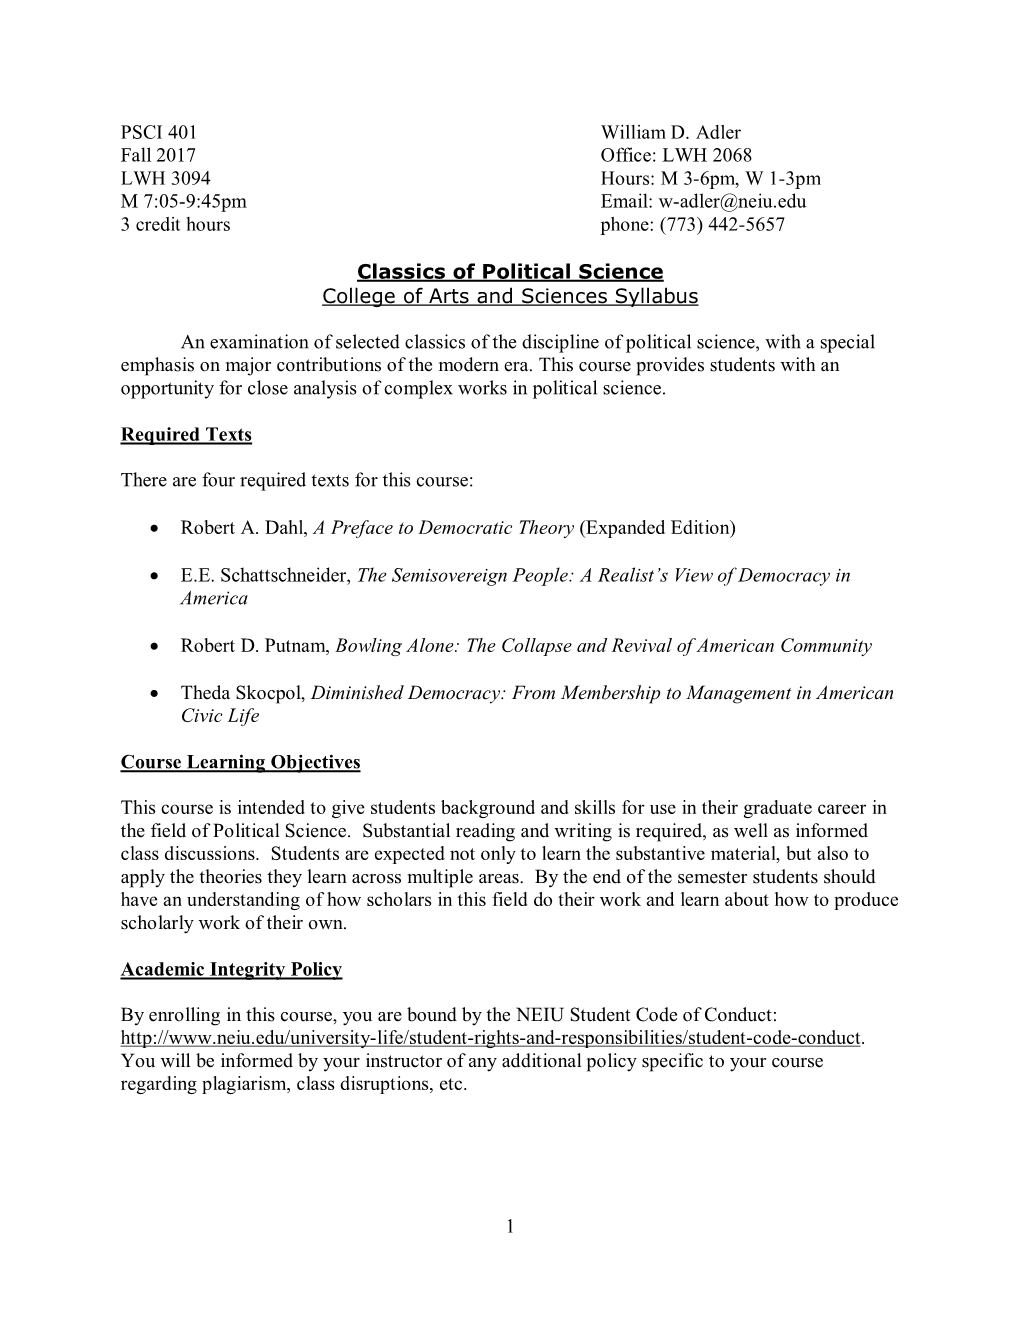 PSCI 401 Classics of Political Science